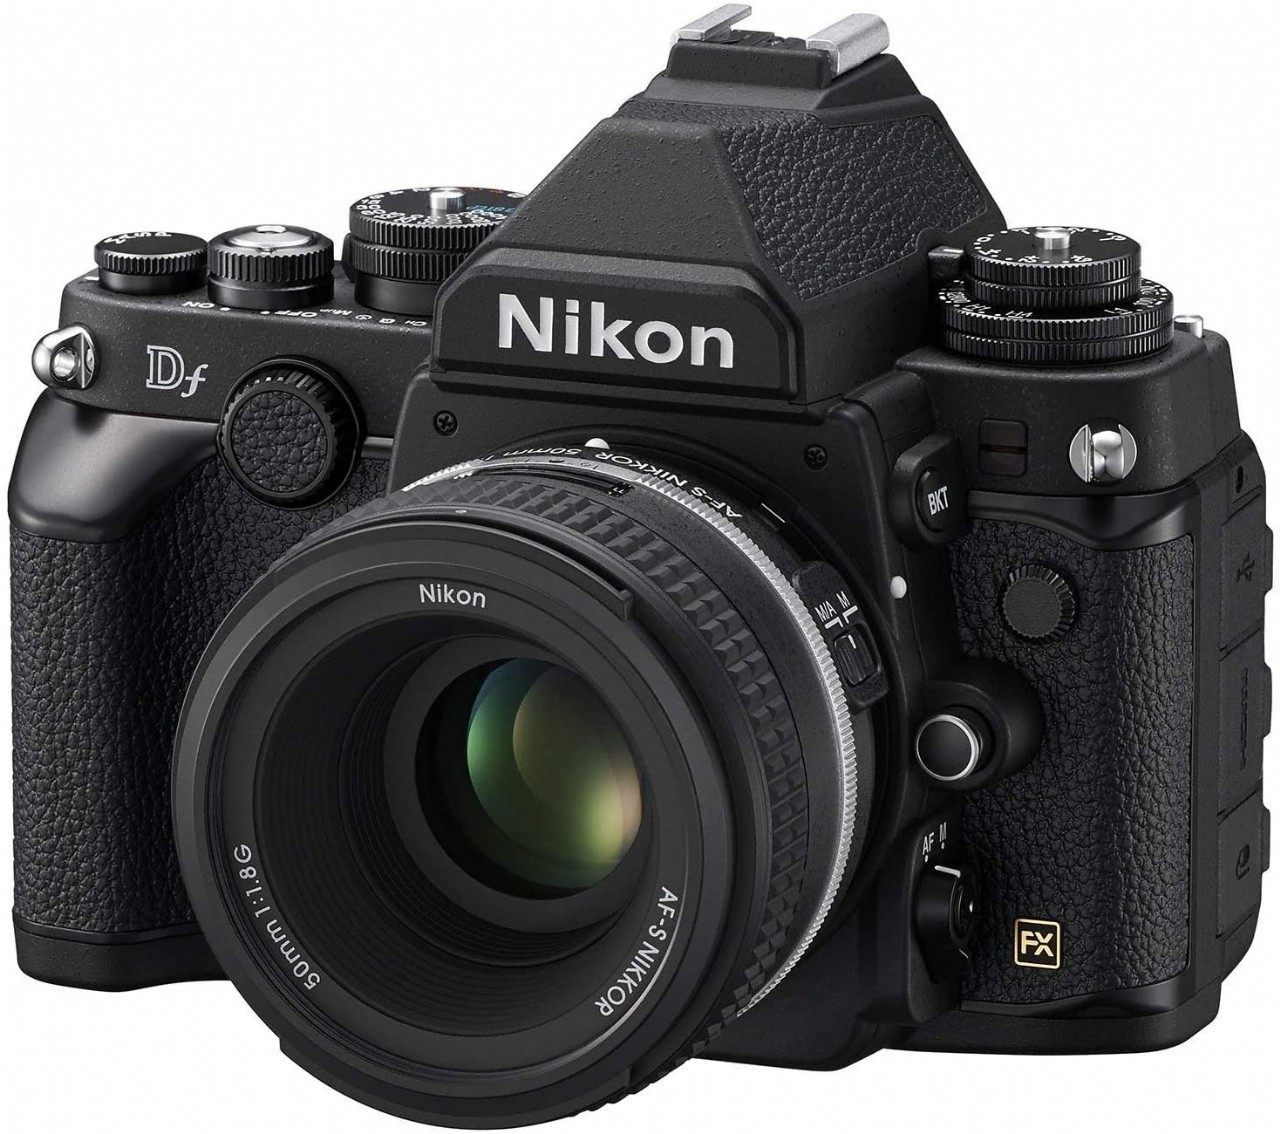 Nikon Df 16.2 MP CMOS FX-Format Digital SLR Camera Body (Black) (Renewed)